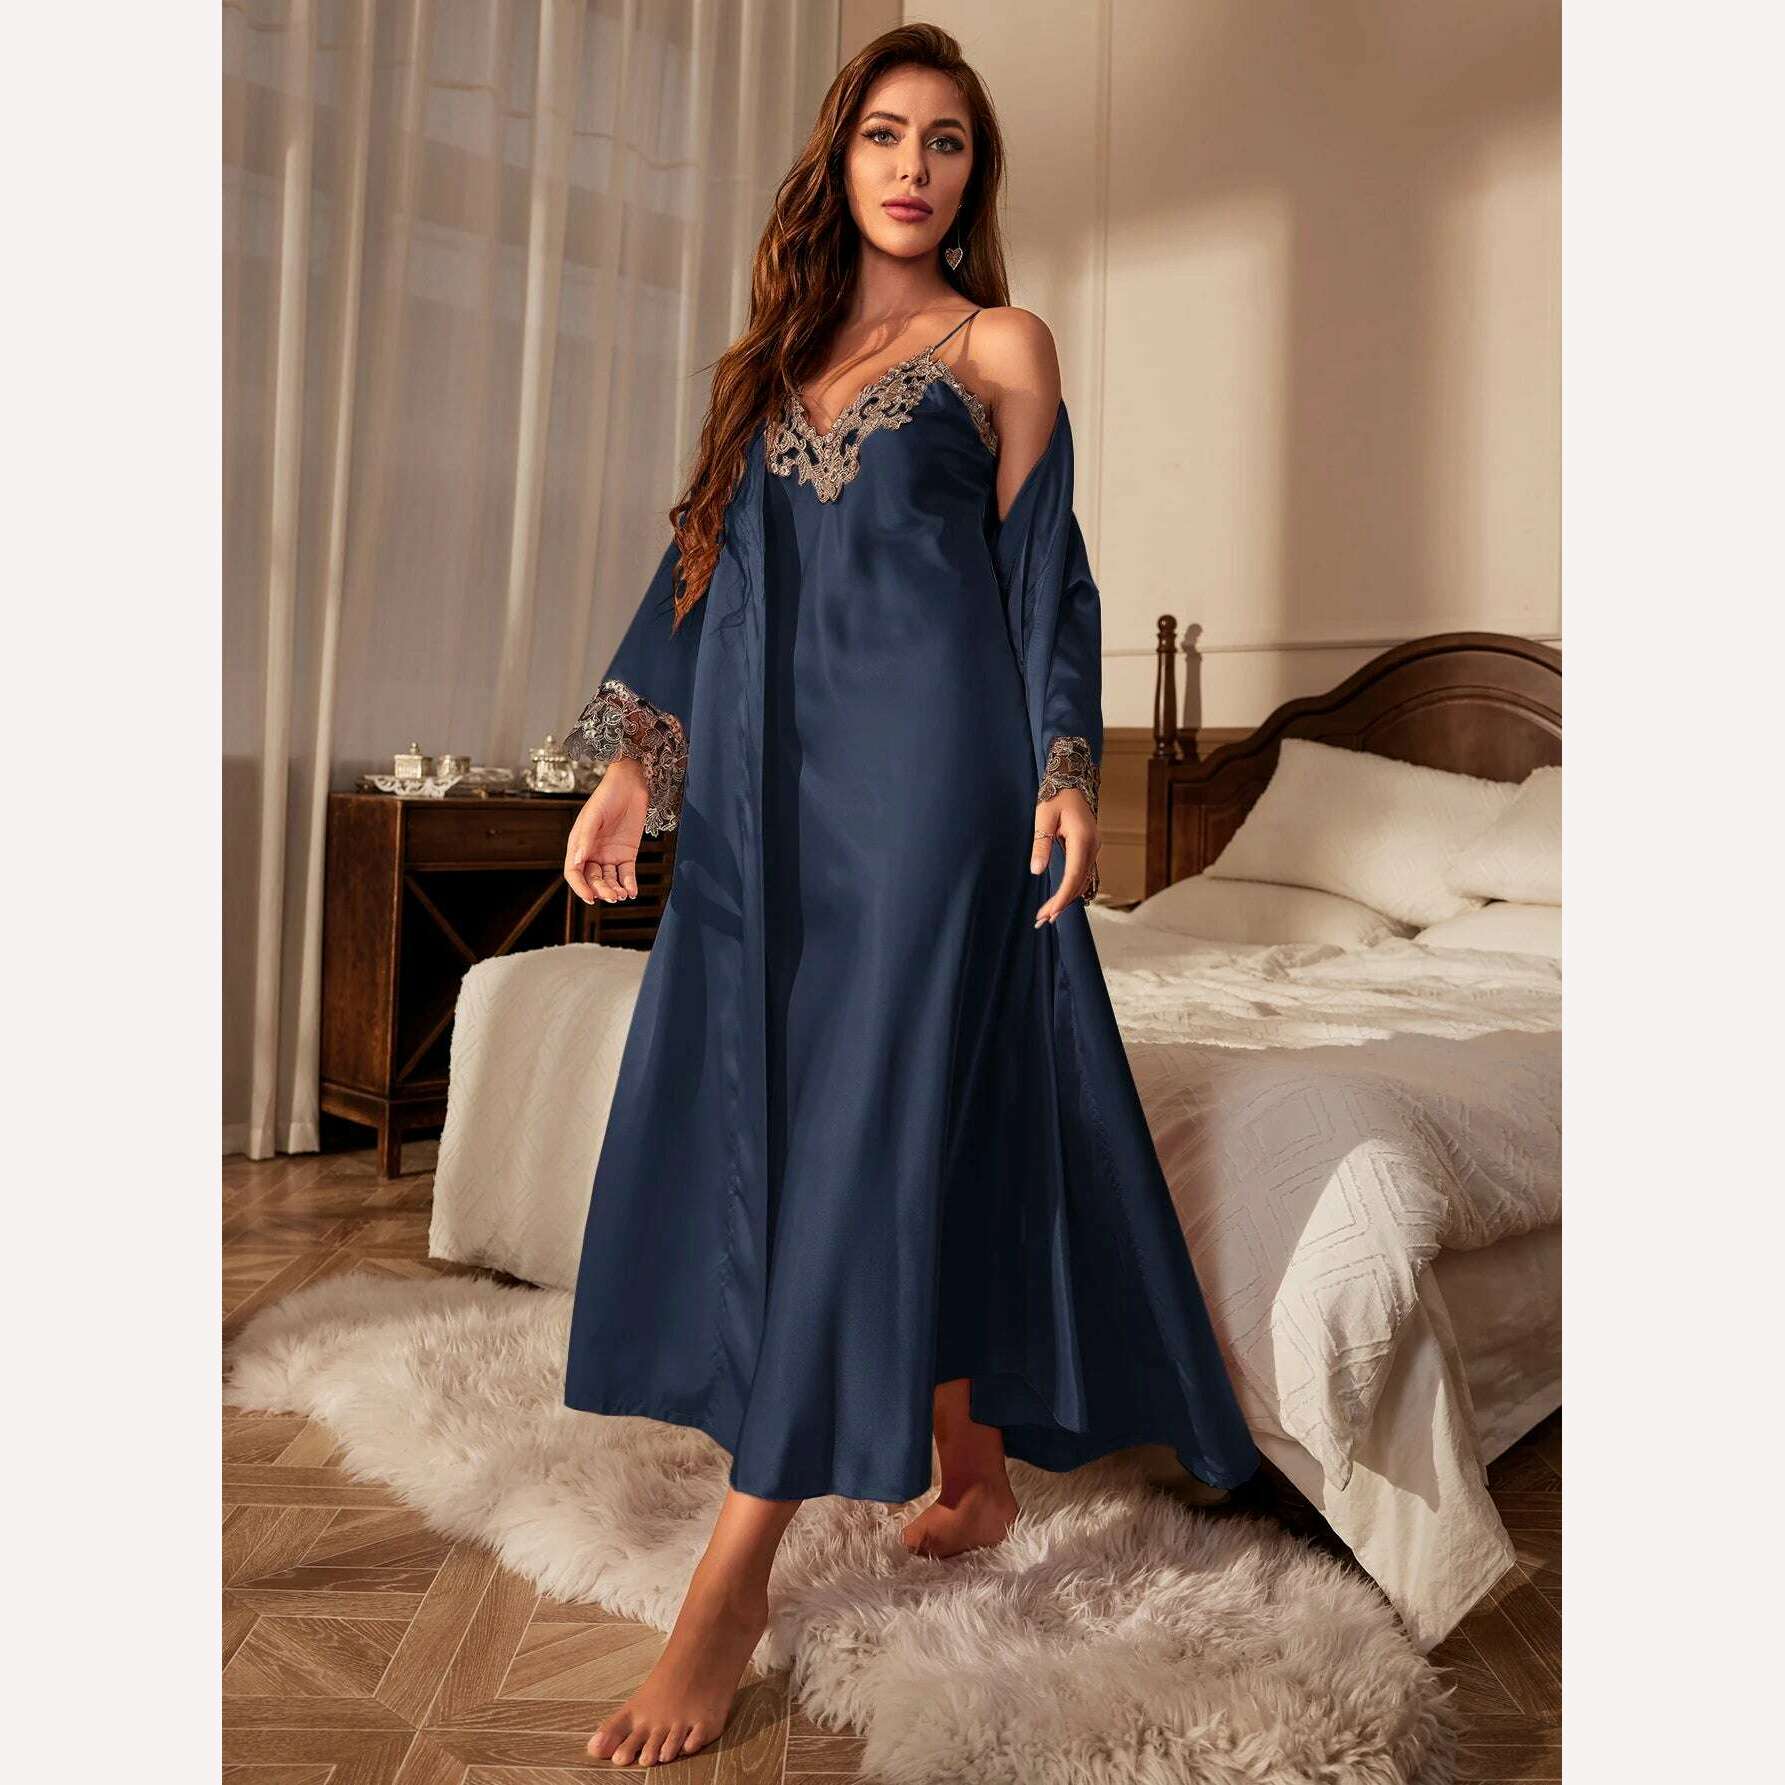 KIMLUD, Contrast Lace Pajama Set Long Sleeve Robe With Belt  V Neck Slip Dress Women's Sleepwear  Loungewear, Navy / S, KIMLUD Womens Clothes